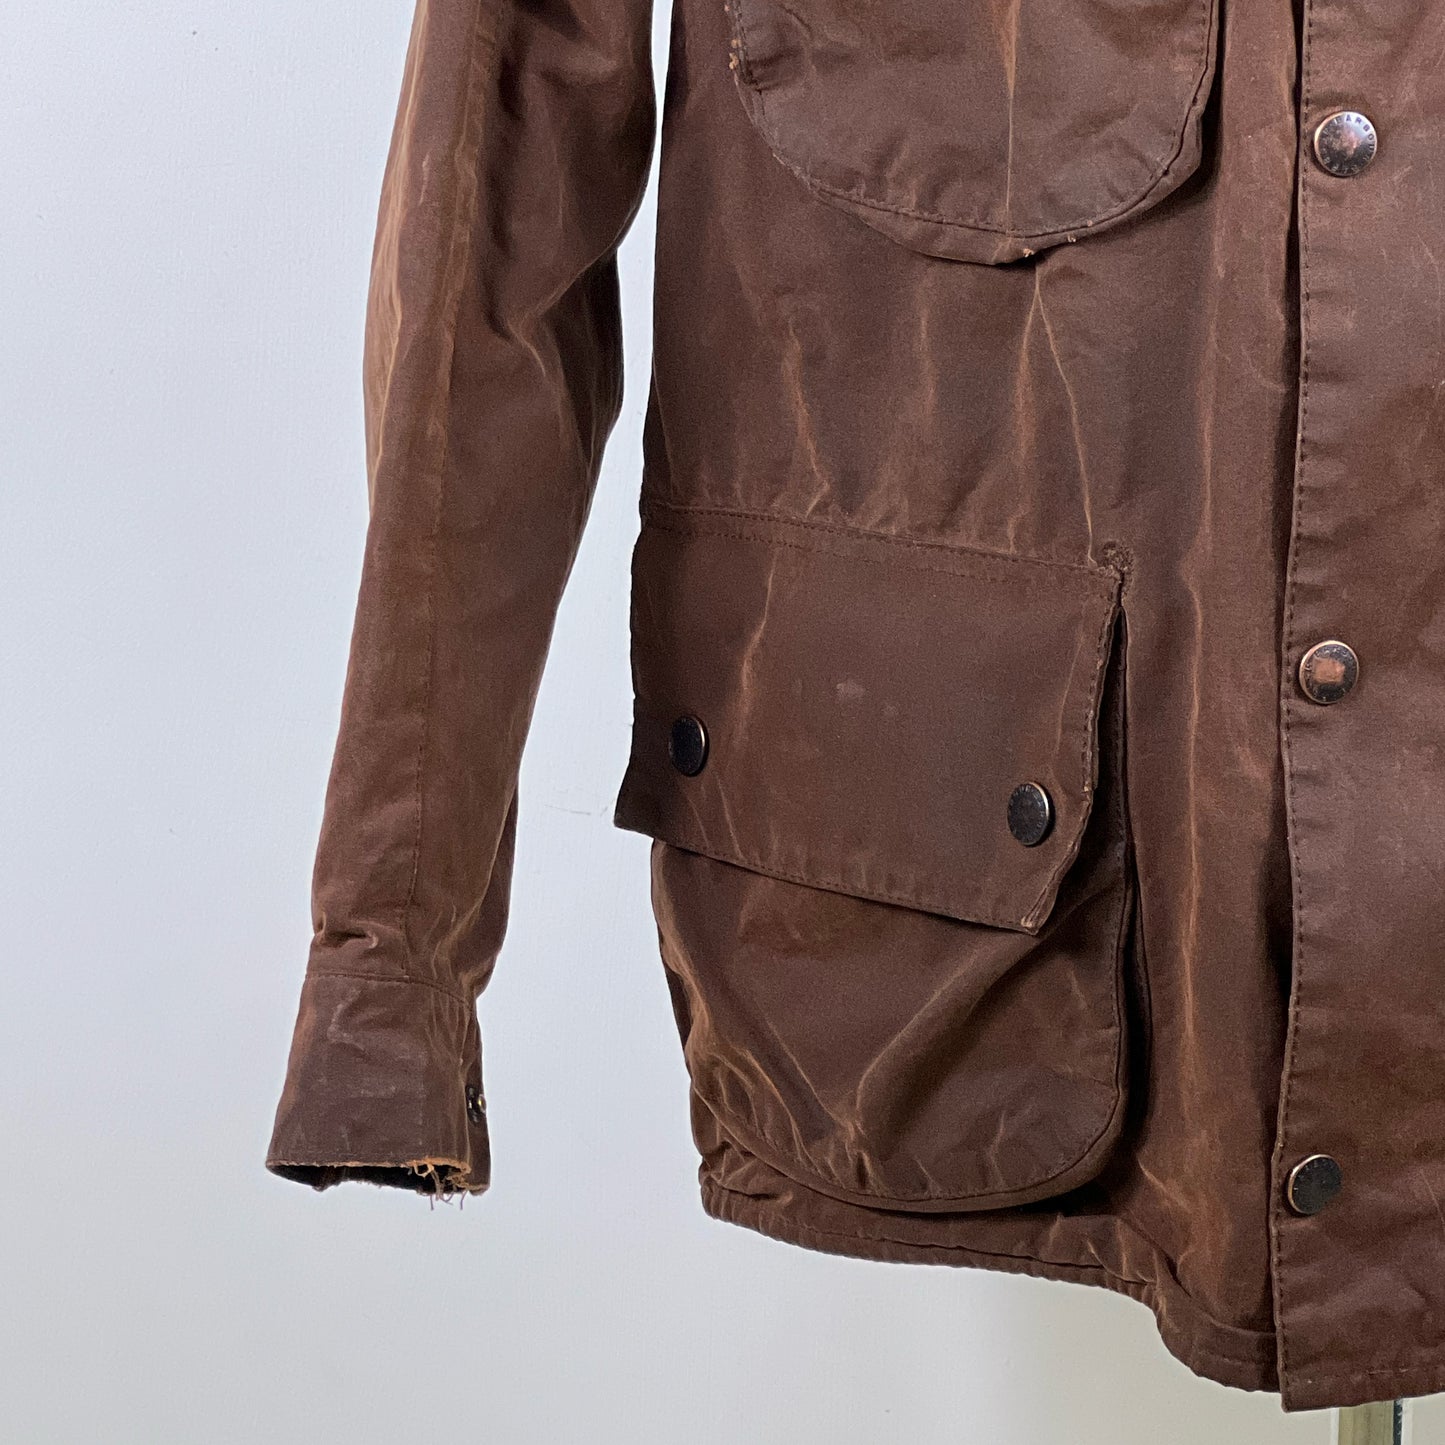 Giacca Barbour International da uomo marrone c44/112 cm-Man Motorcycle brown jacket size L/XL